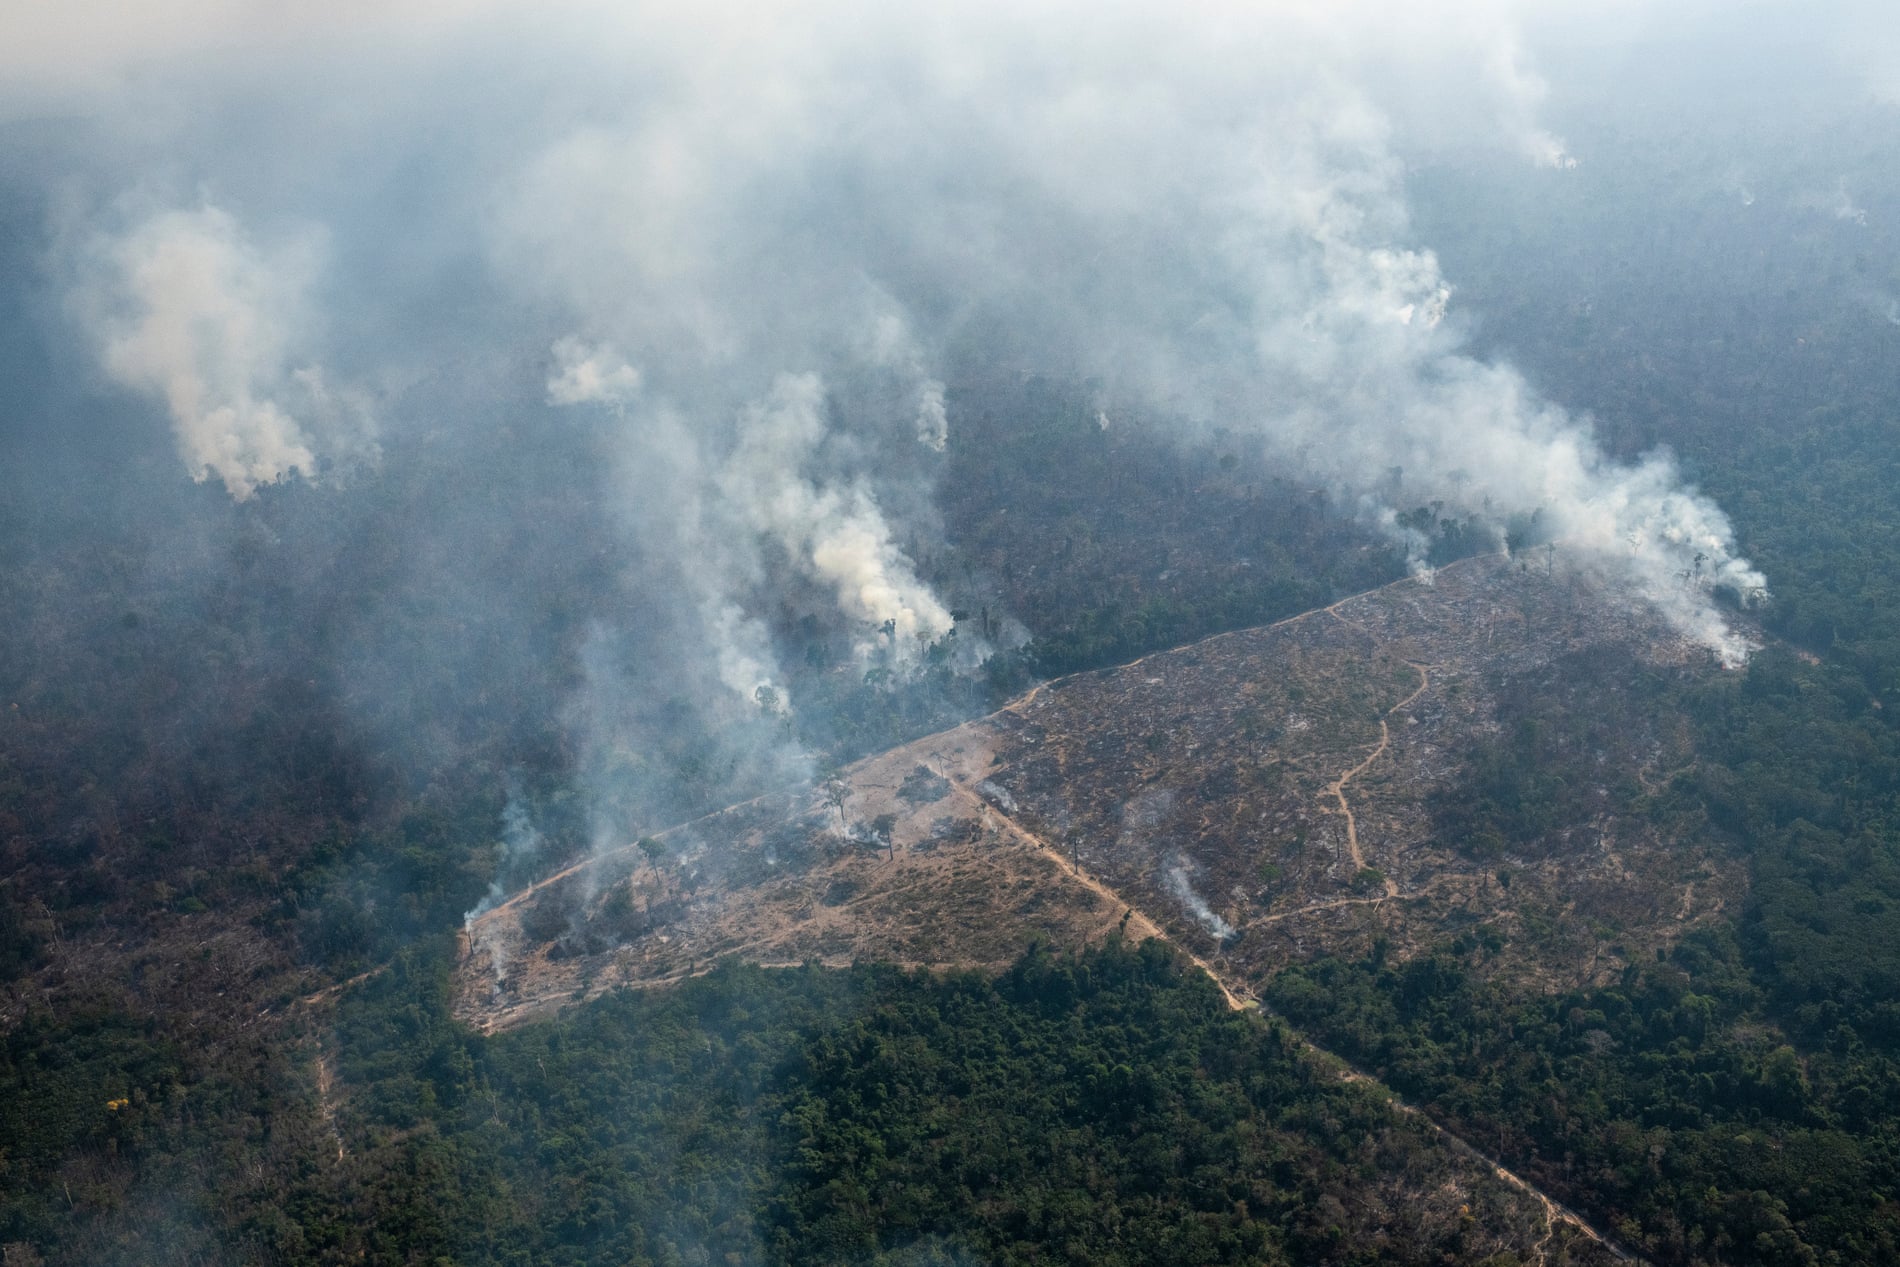 Fire and deforestation scar the Iriri national forest reserve near Novo Progresso in the Brazilian Amazon.